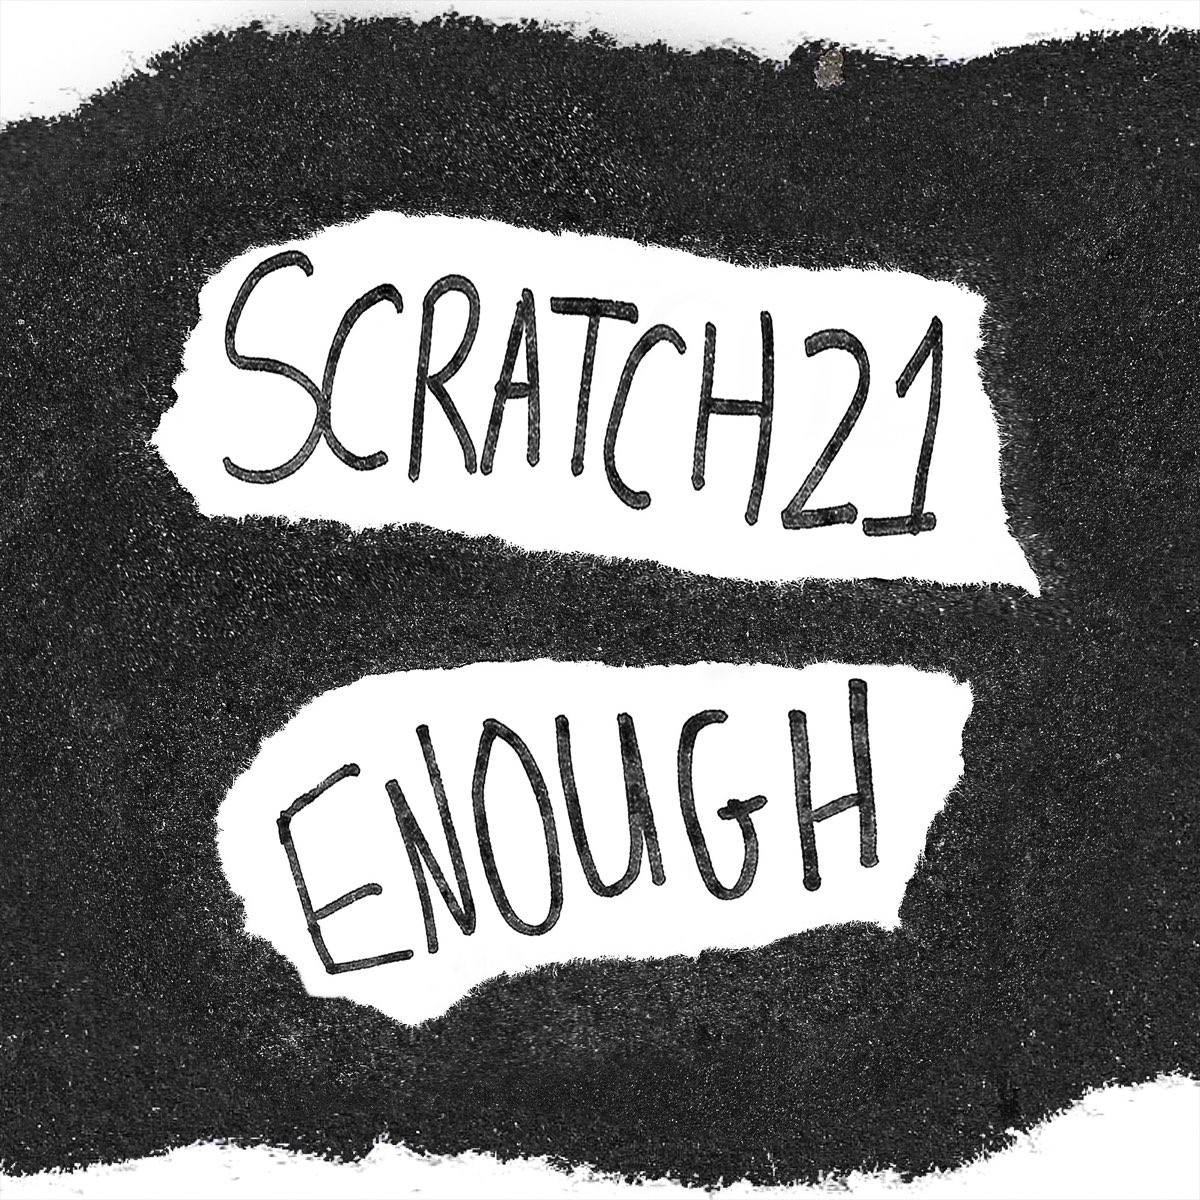 Scratch21. Enough 21 своич. Cooper Mathers Scratch 21. Enough трек